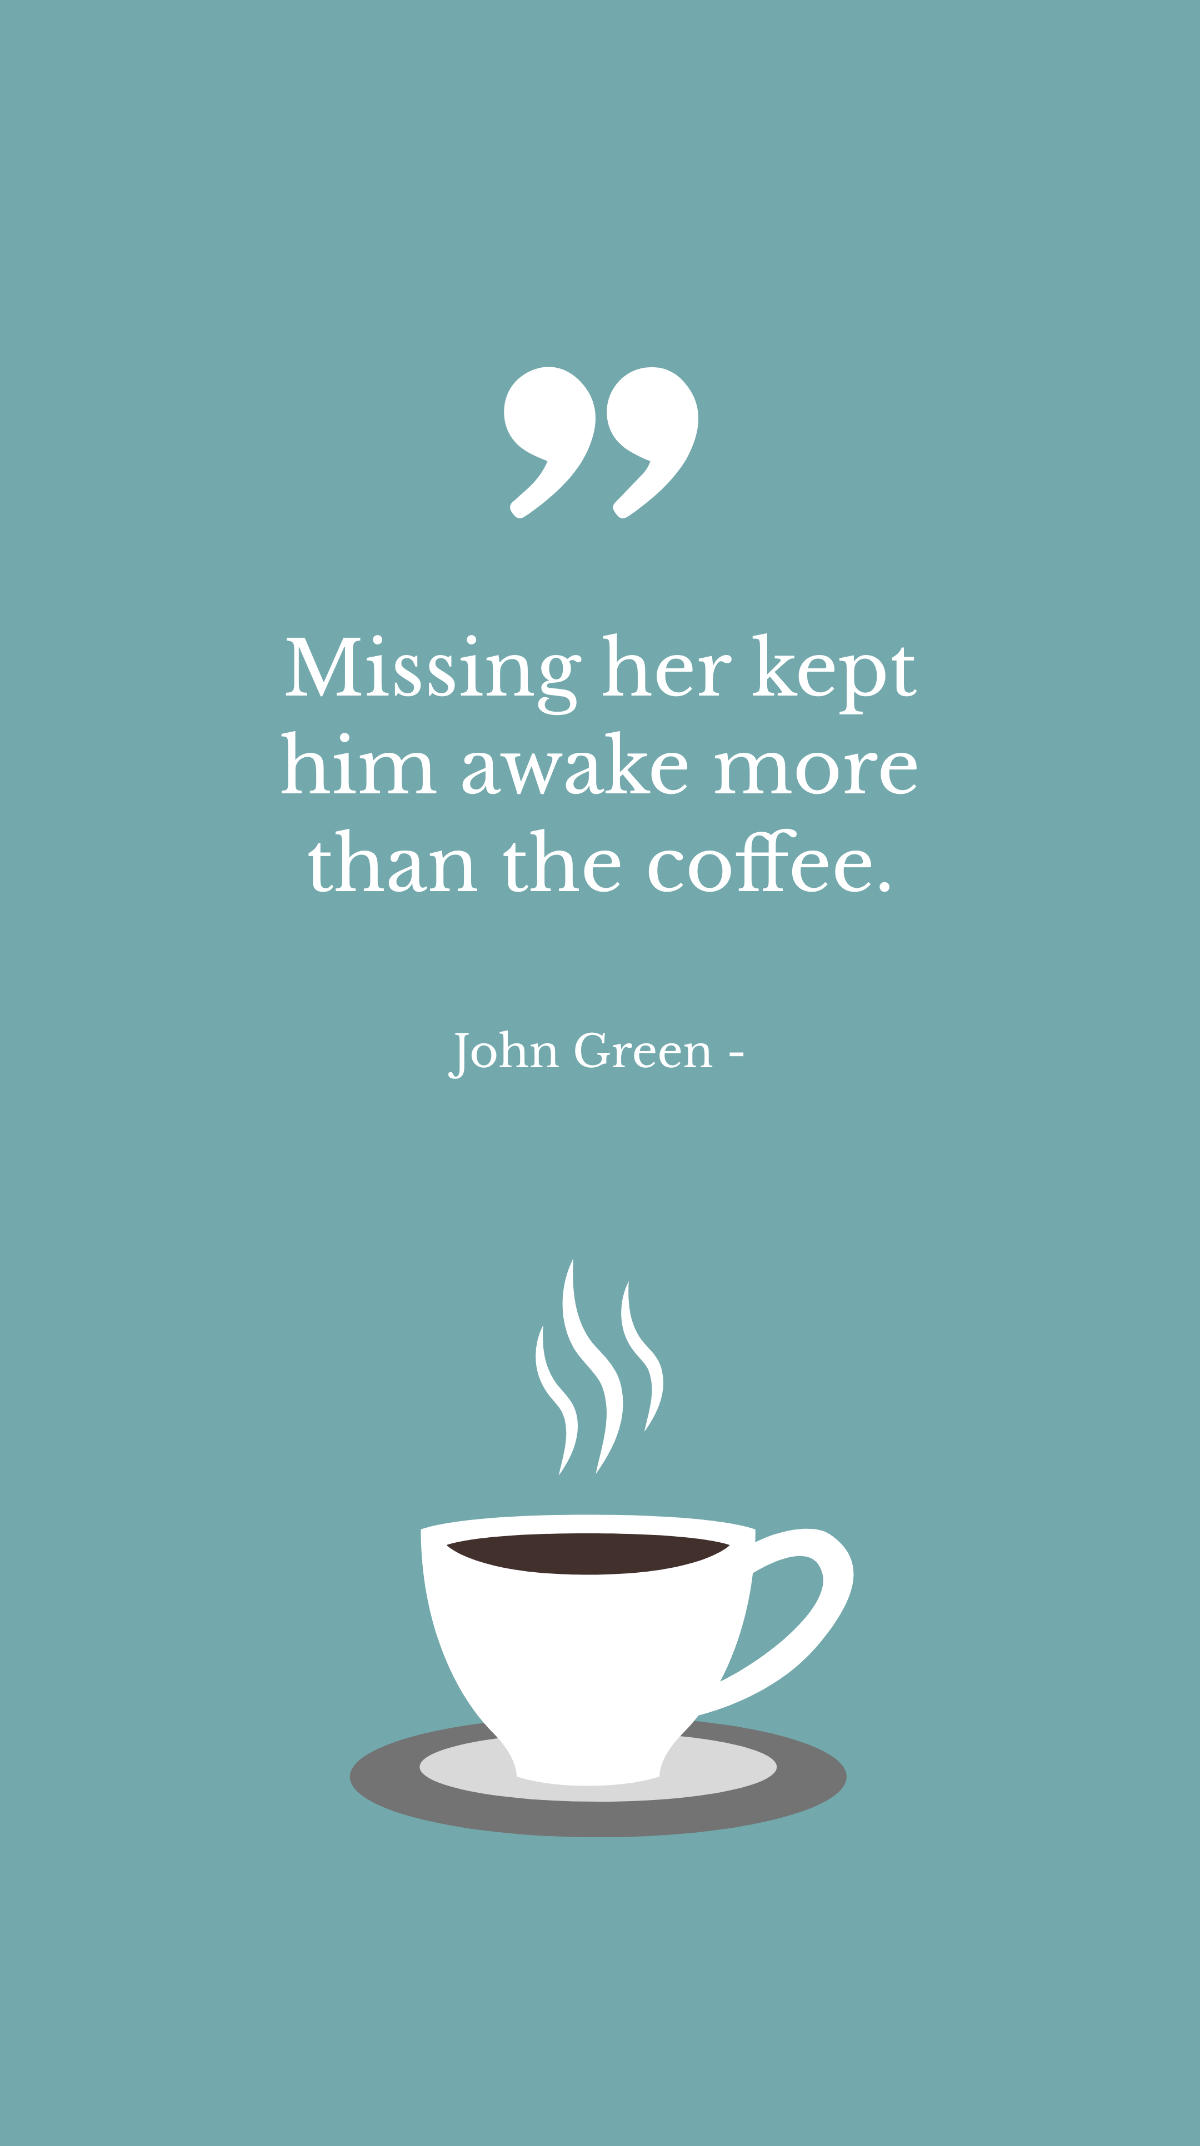 John Green - Missing her kept him awake more than the coffee.